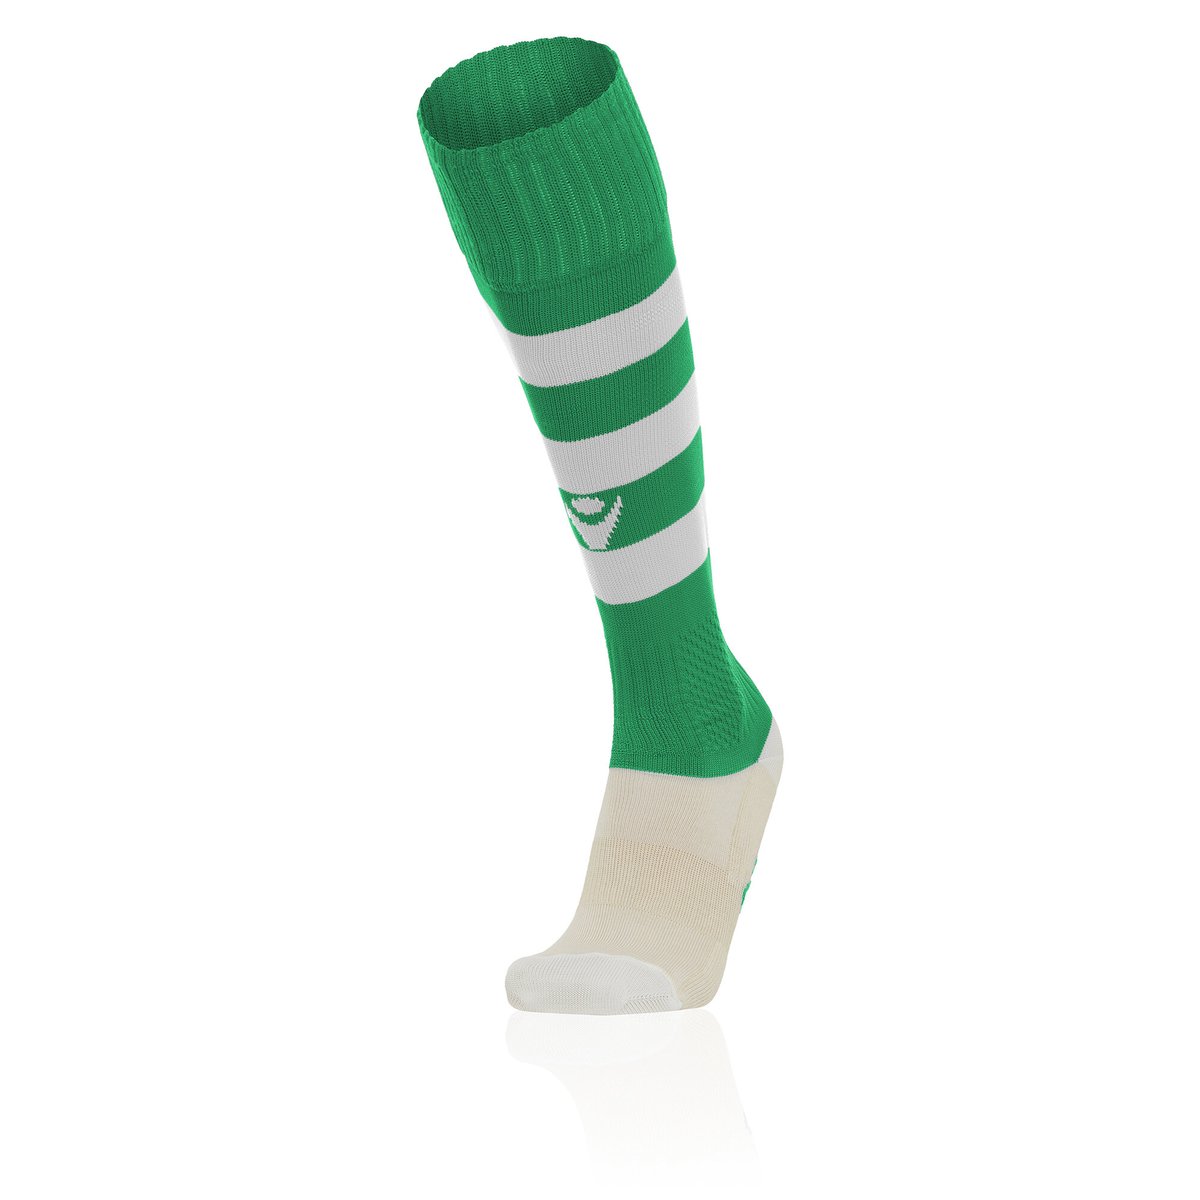 Macron Hoops Match Sock - Green/White (Pack of 5)